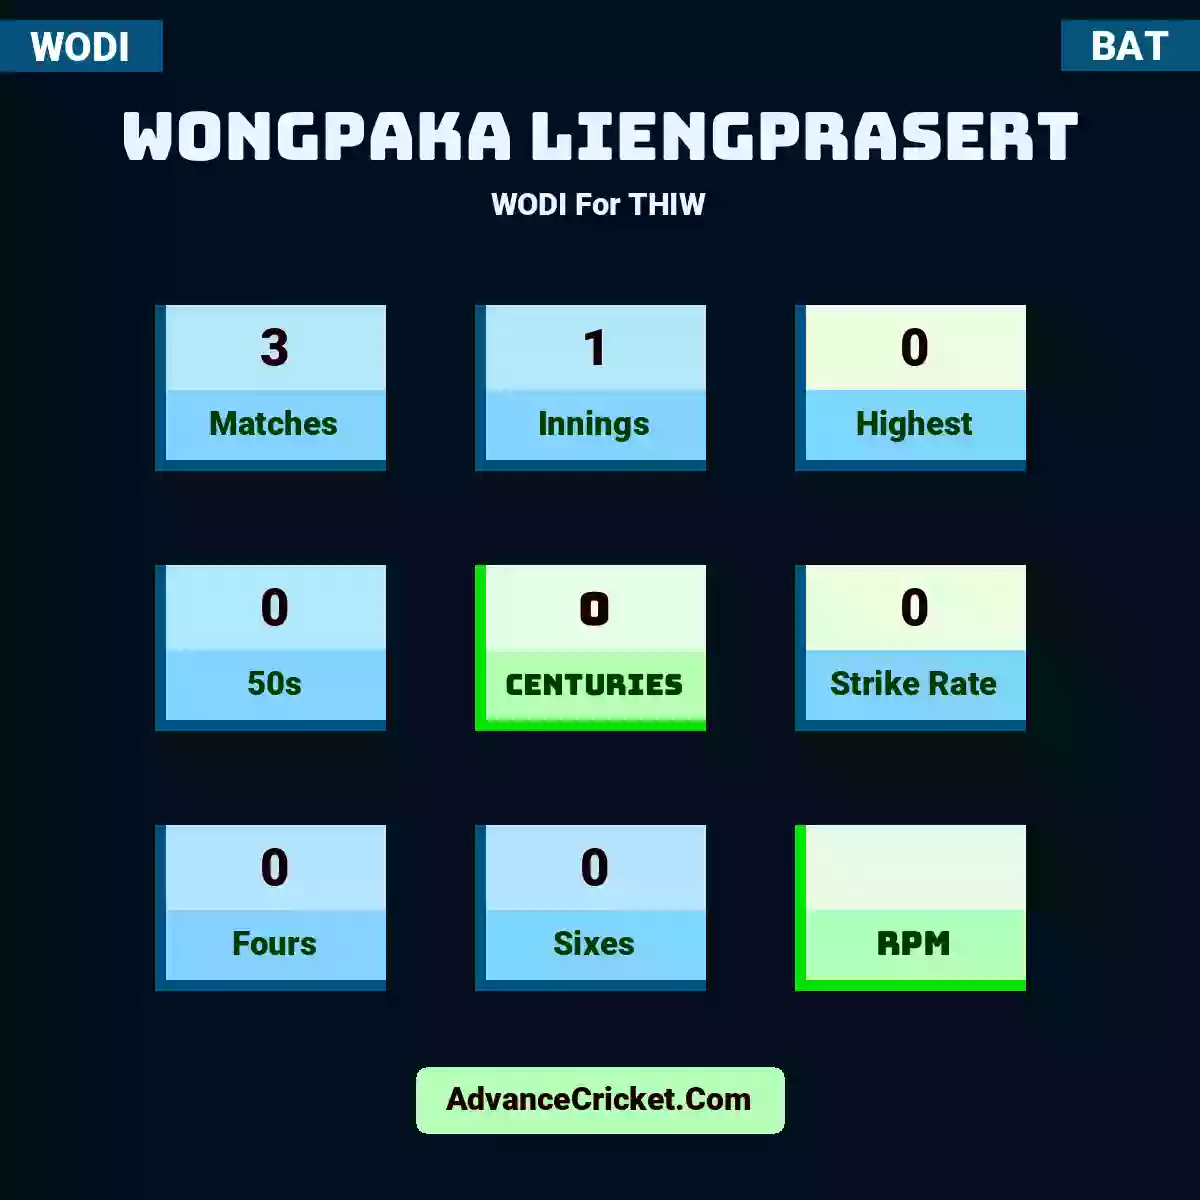 Wongpaka Liengprasert WODI  For THIW, Wongpaka Liengprasert played 3 matches, scored 0 runs as highest, 0 half-centuries, and 0 centuries, with a strike rate of 0. W.Liengprasert hit 0 fours and 0 sixes.